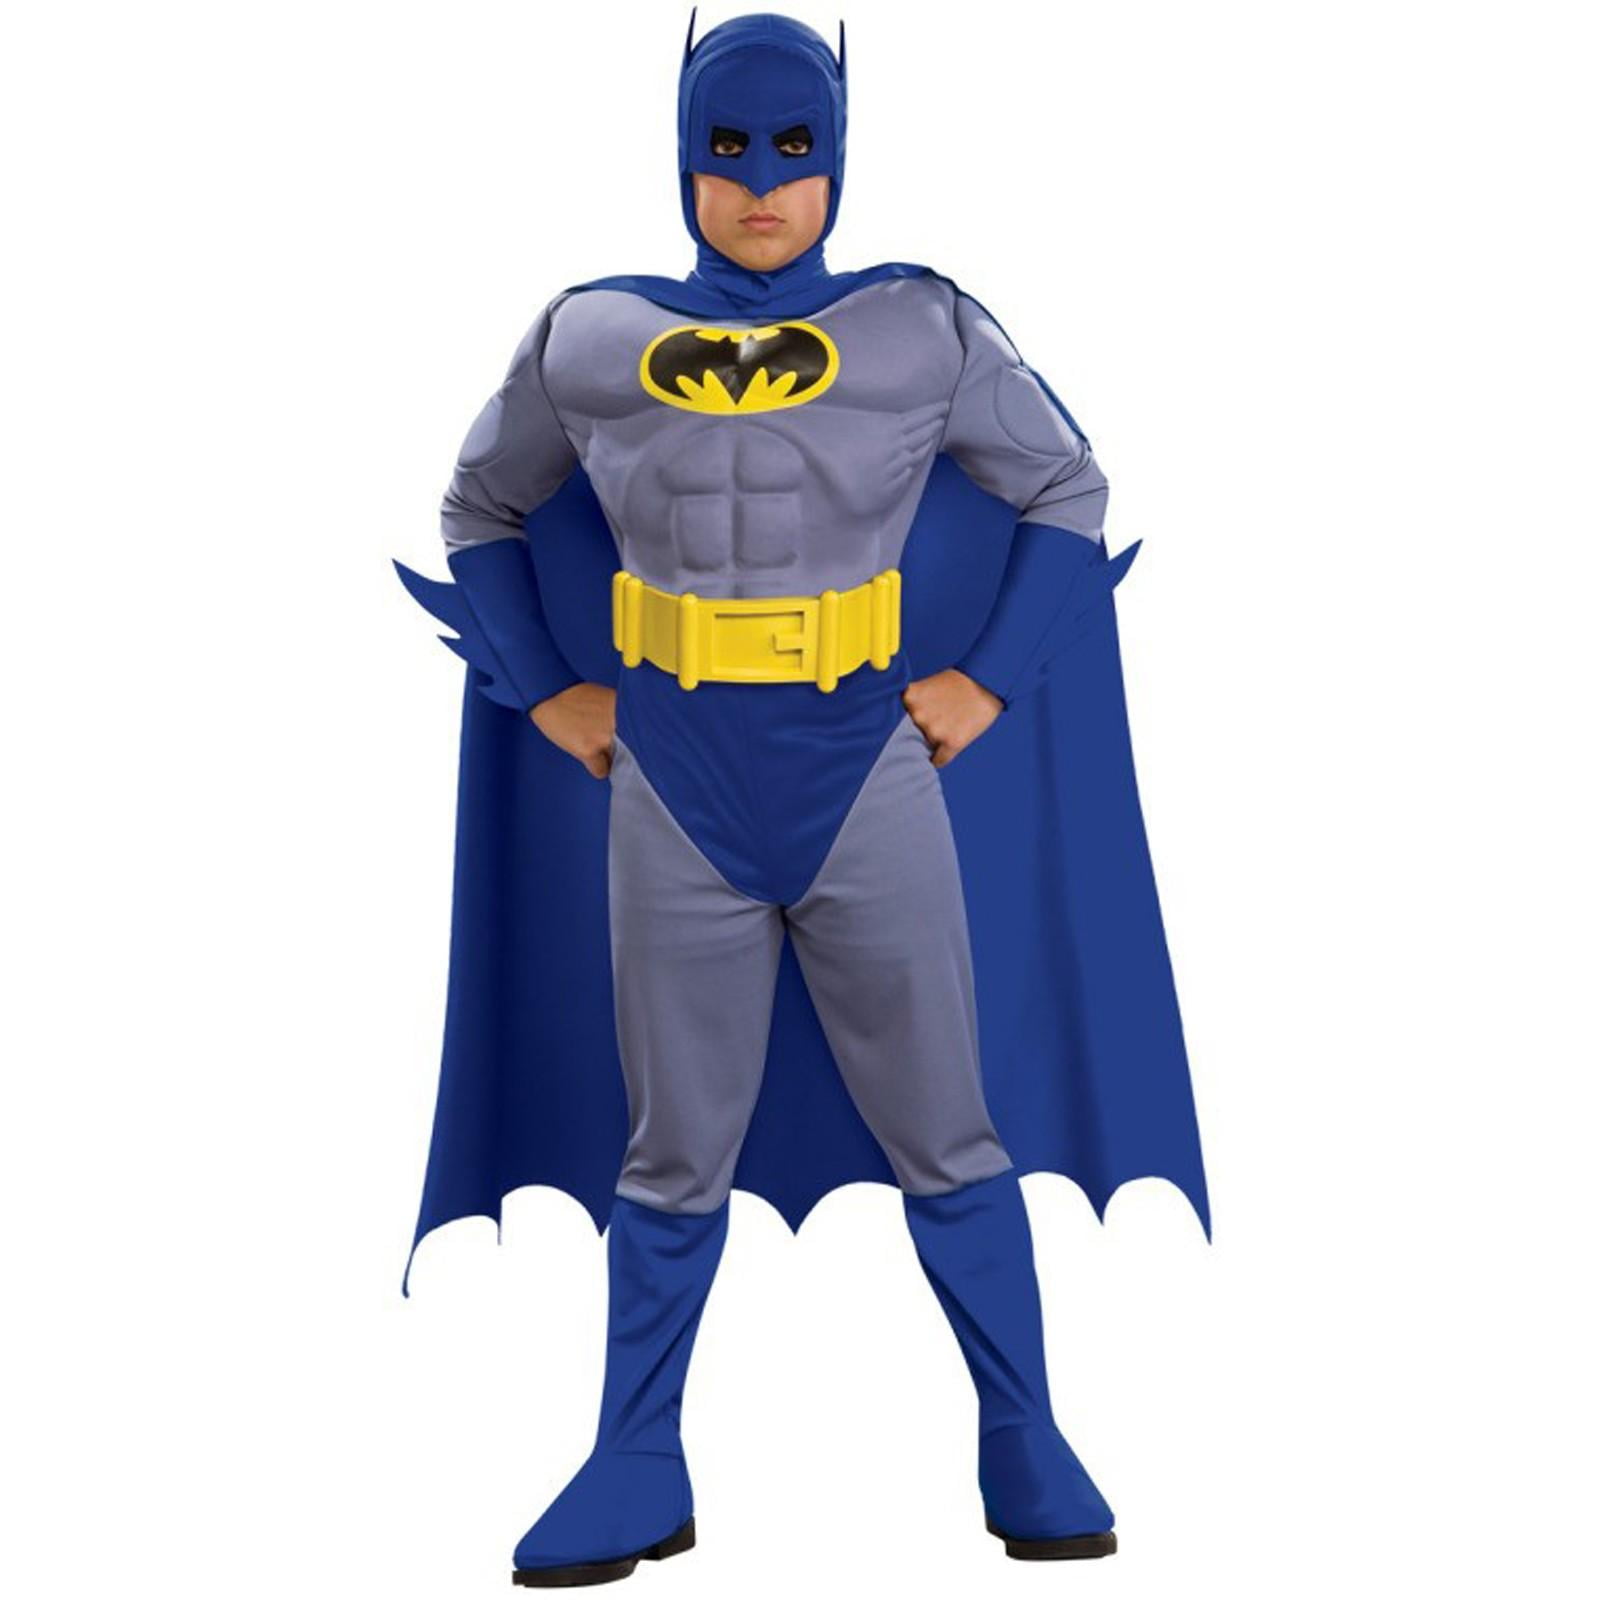 CK43 Licensed Batman Brave & Bold Deluxe M/C Batman Toddler Boys Child Costume 